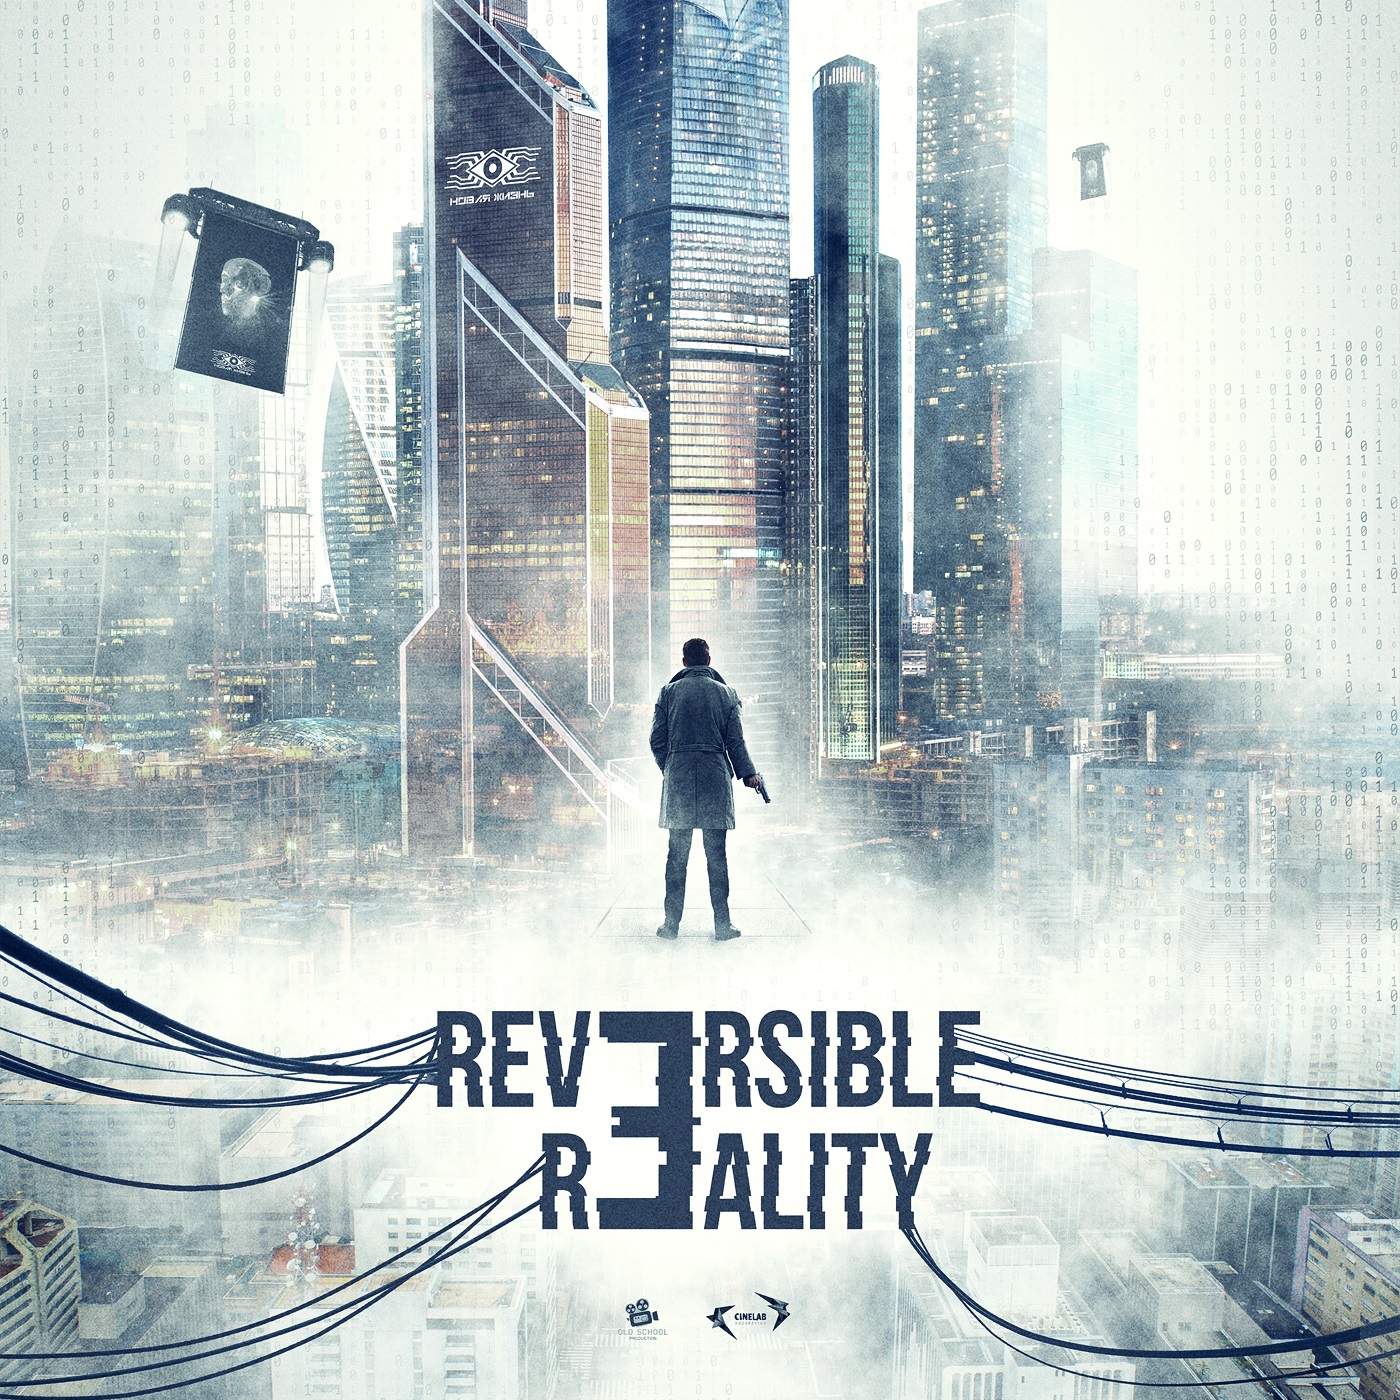 Reversible reality